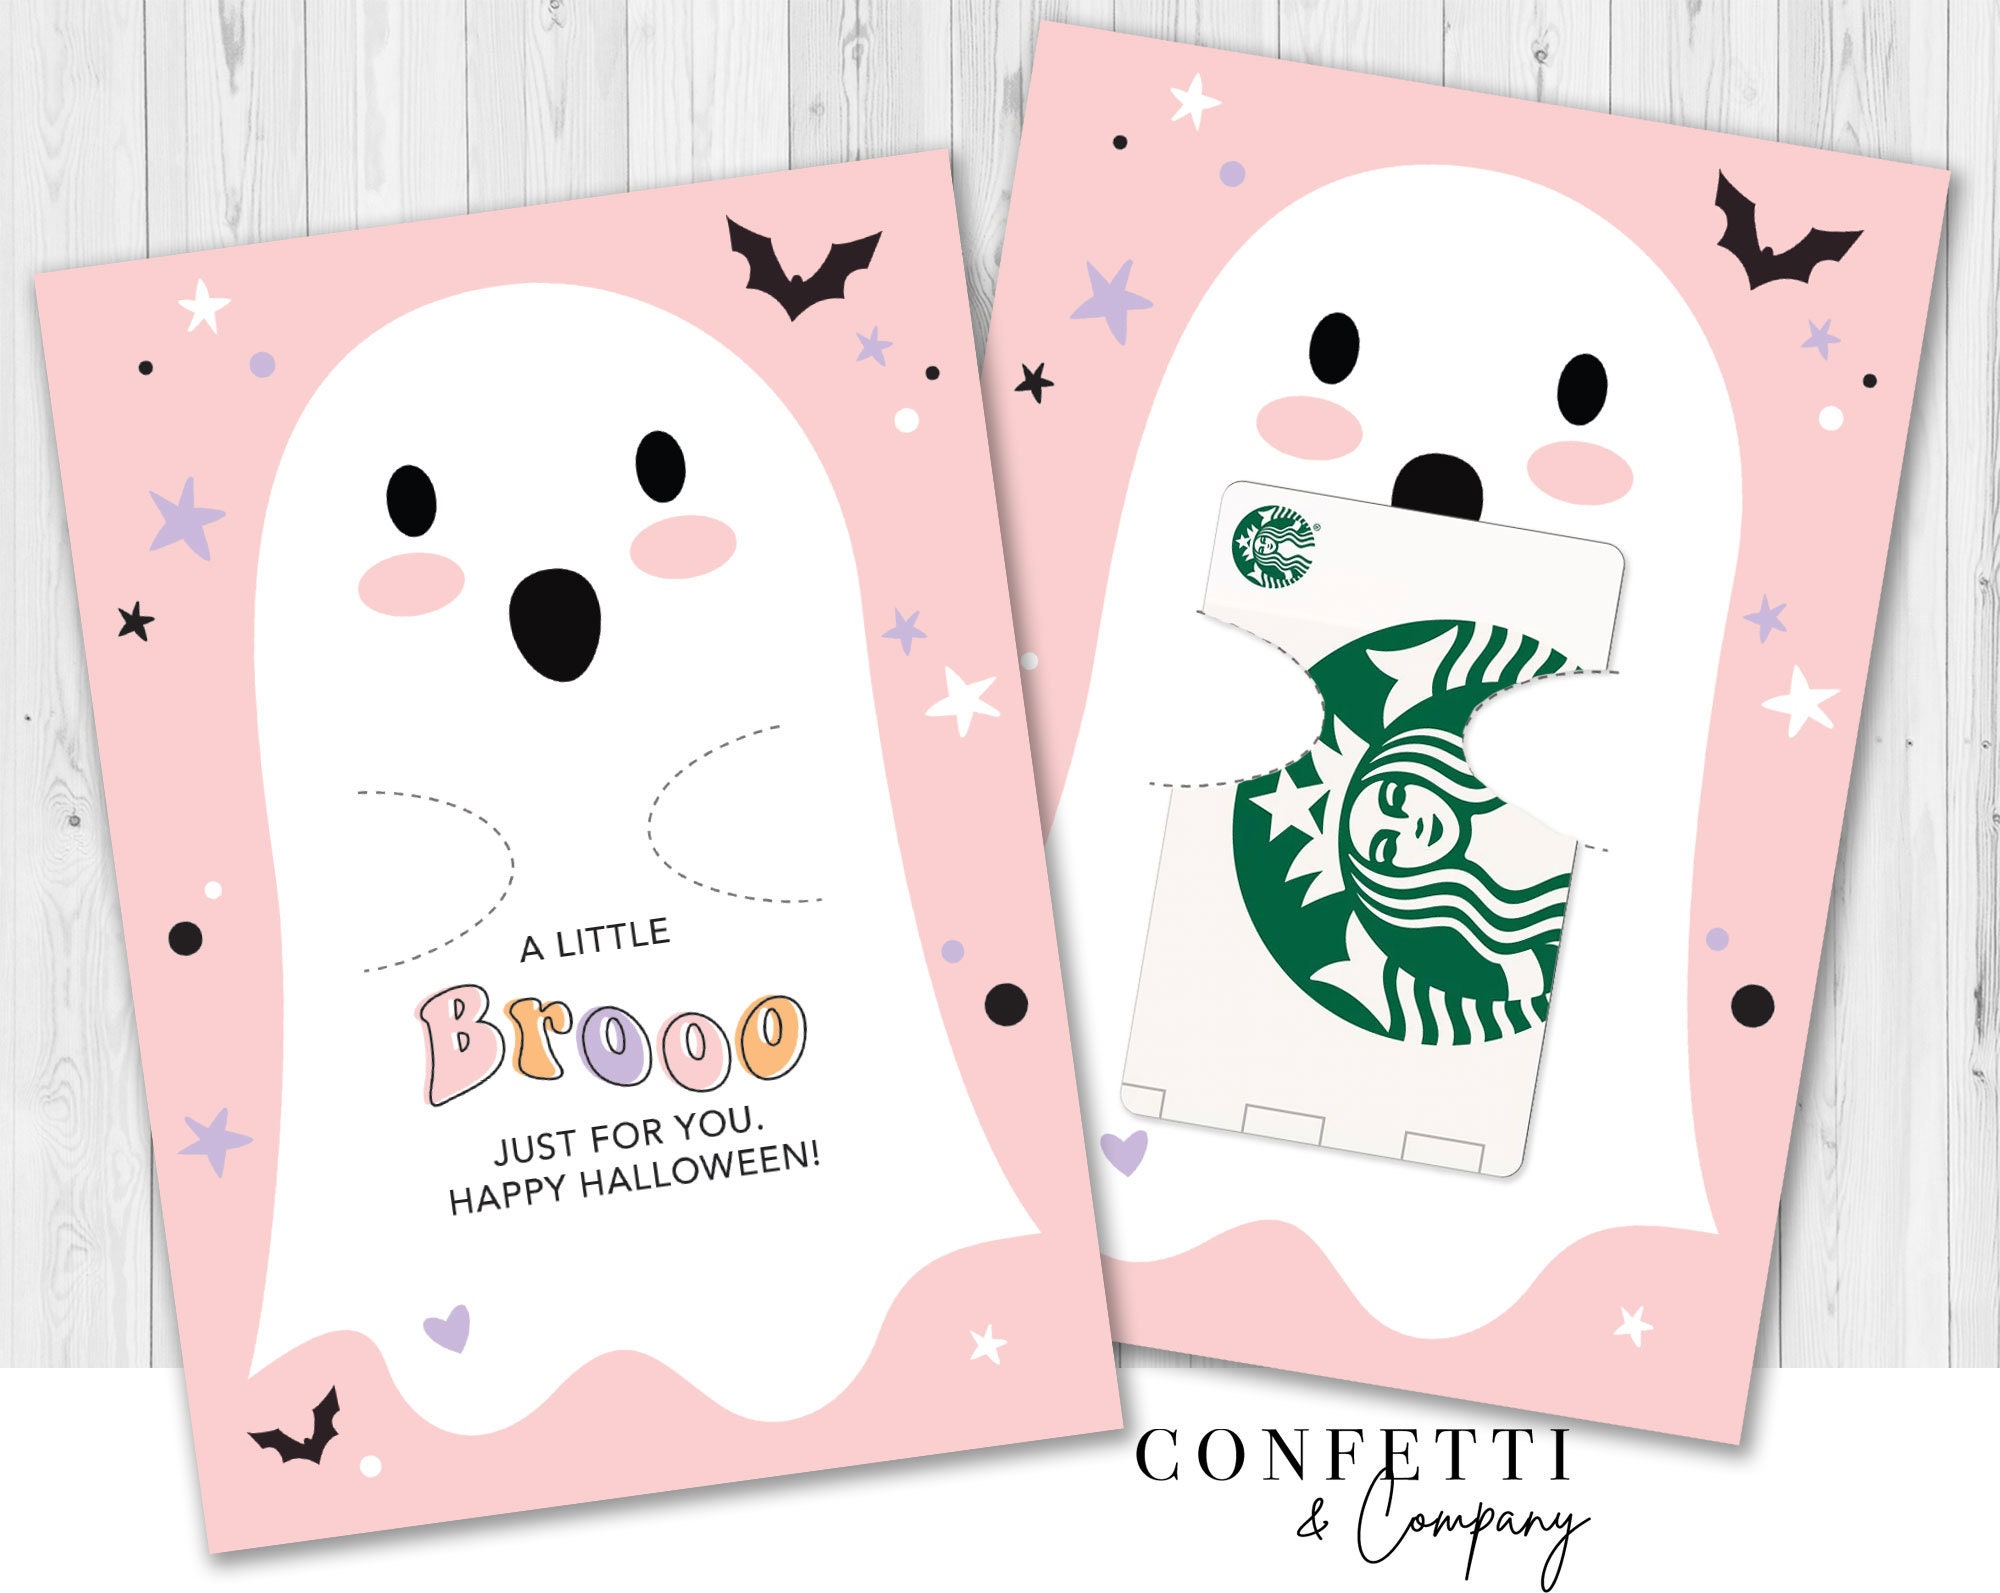 Cute Funny Coffee Gift Powered By Iced Coffee Japan Kawaii Art Greeting  Card for Sale by MintedFresh